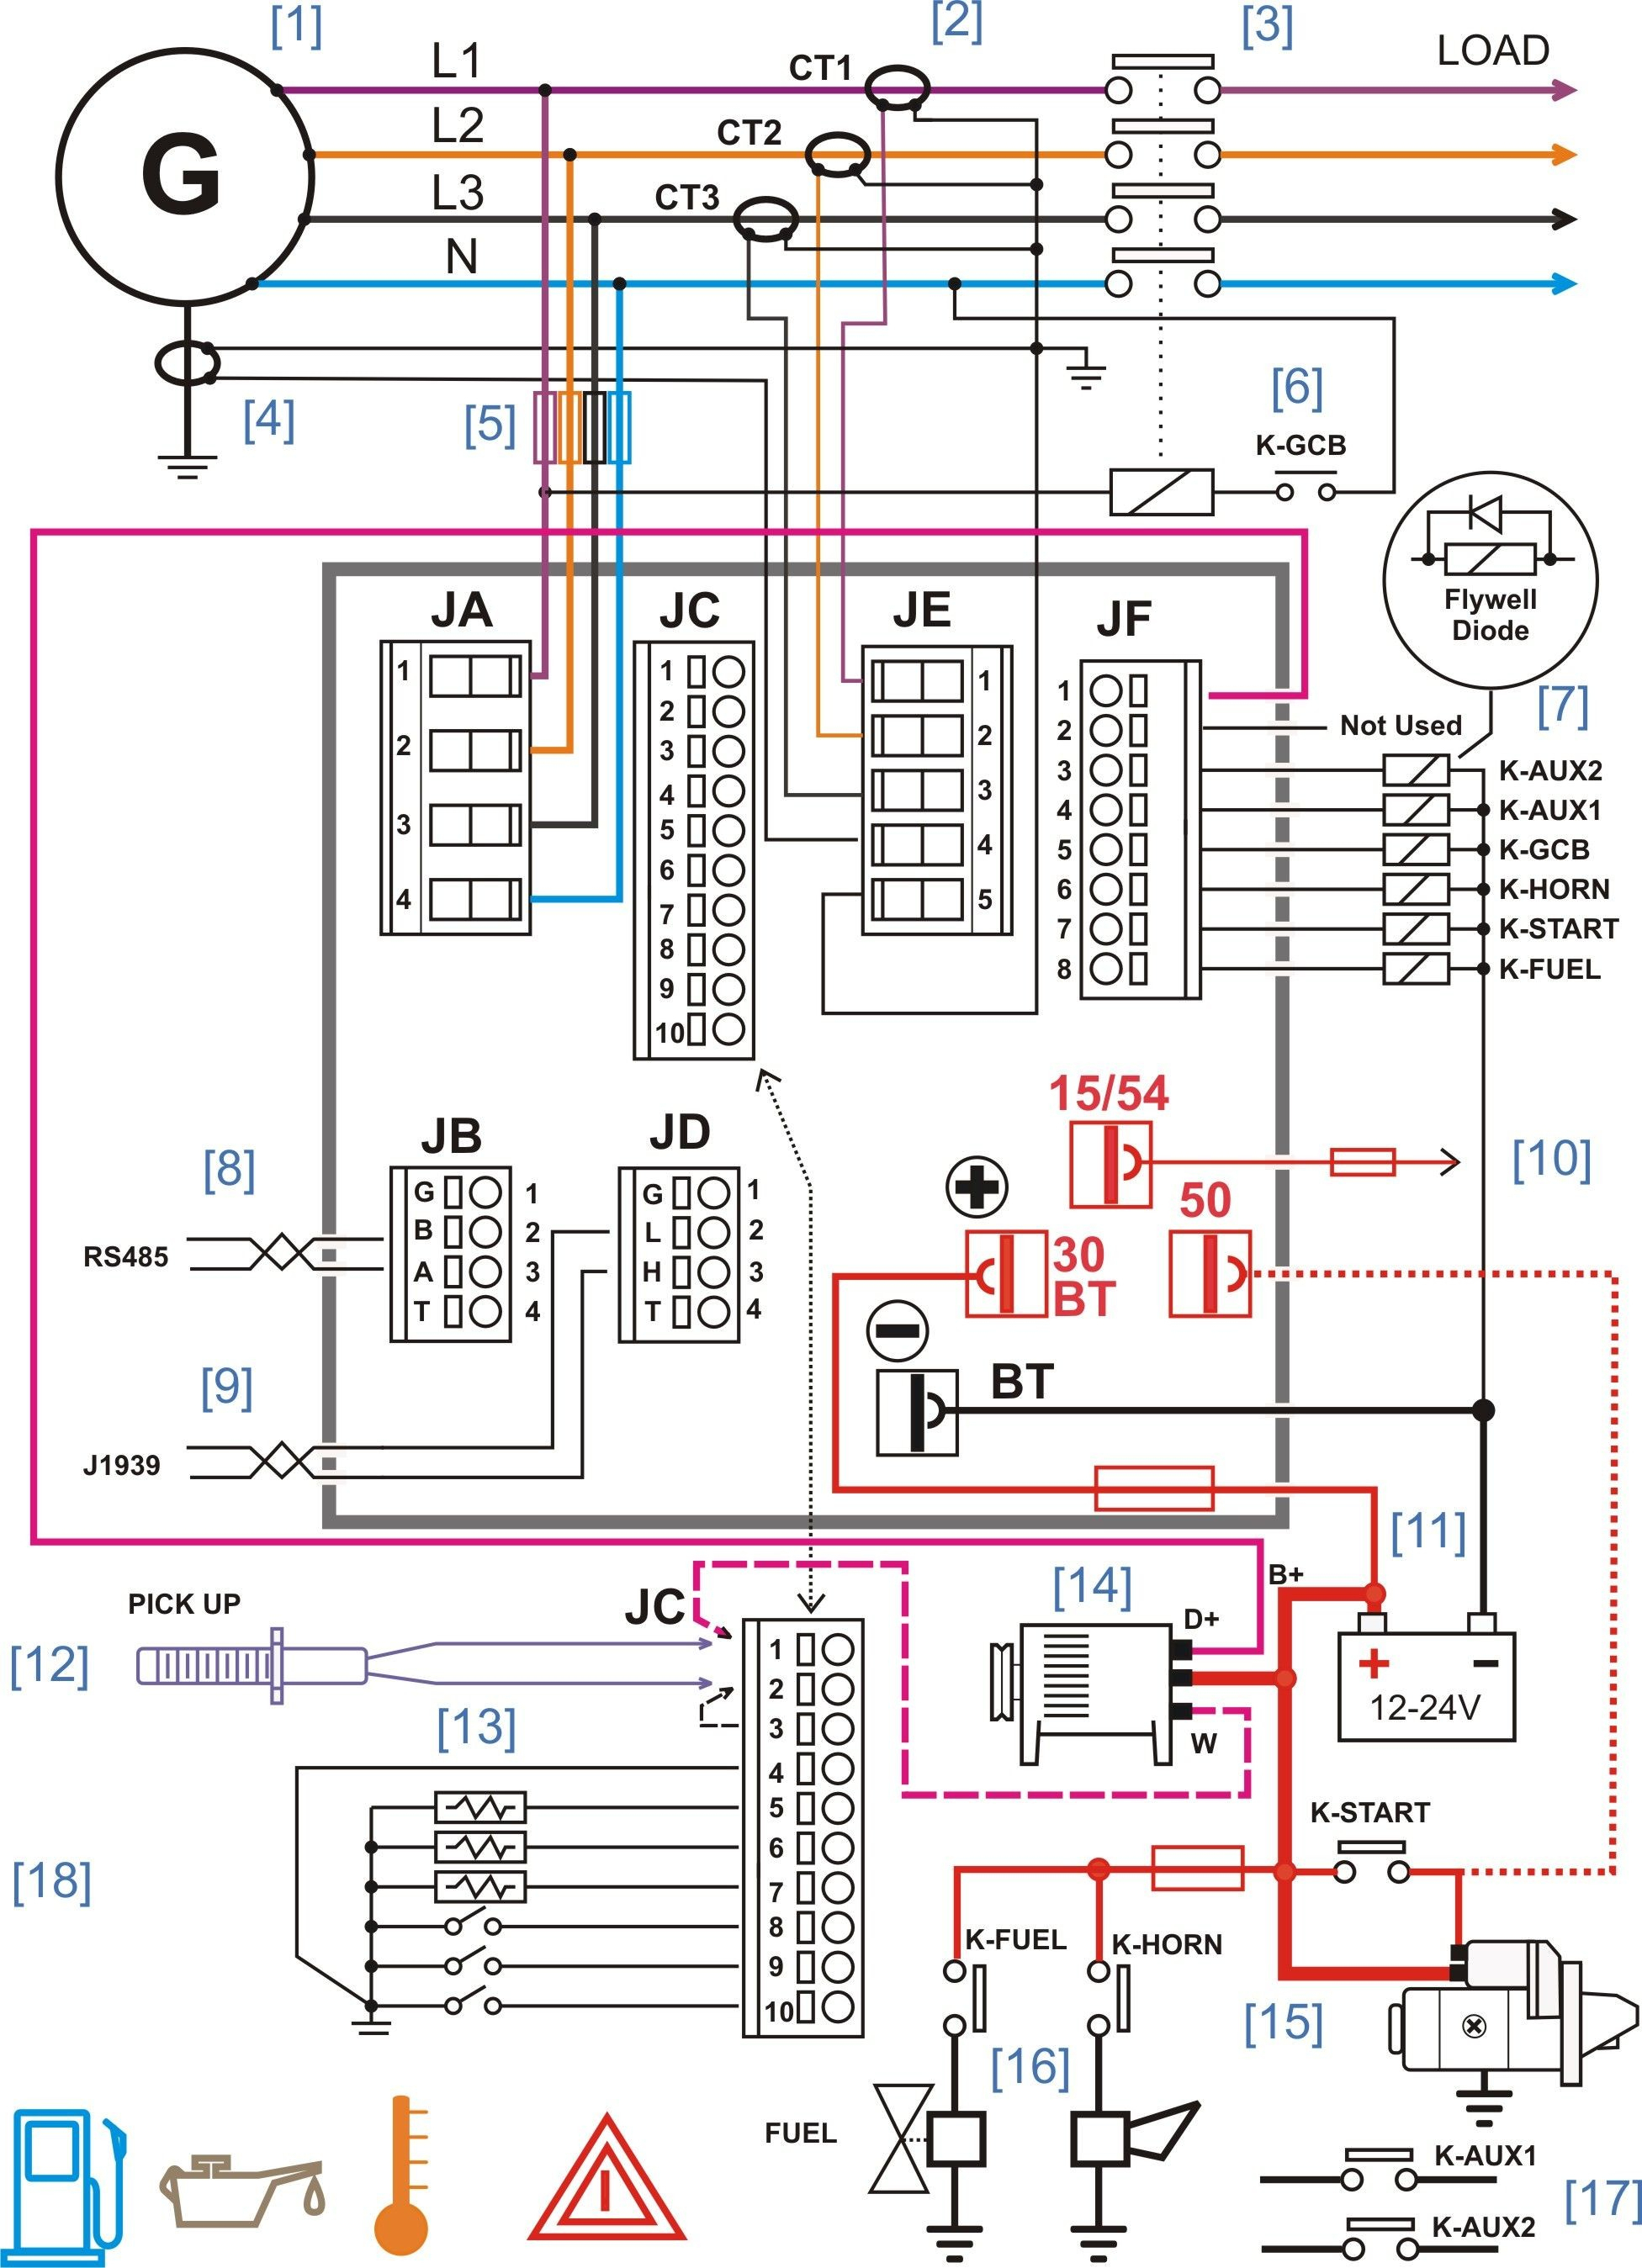 Portable Generator Transfer Switch Wiring Diagram - Wiring Diagram - Manual Transfer Switch Wiring Diagram